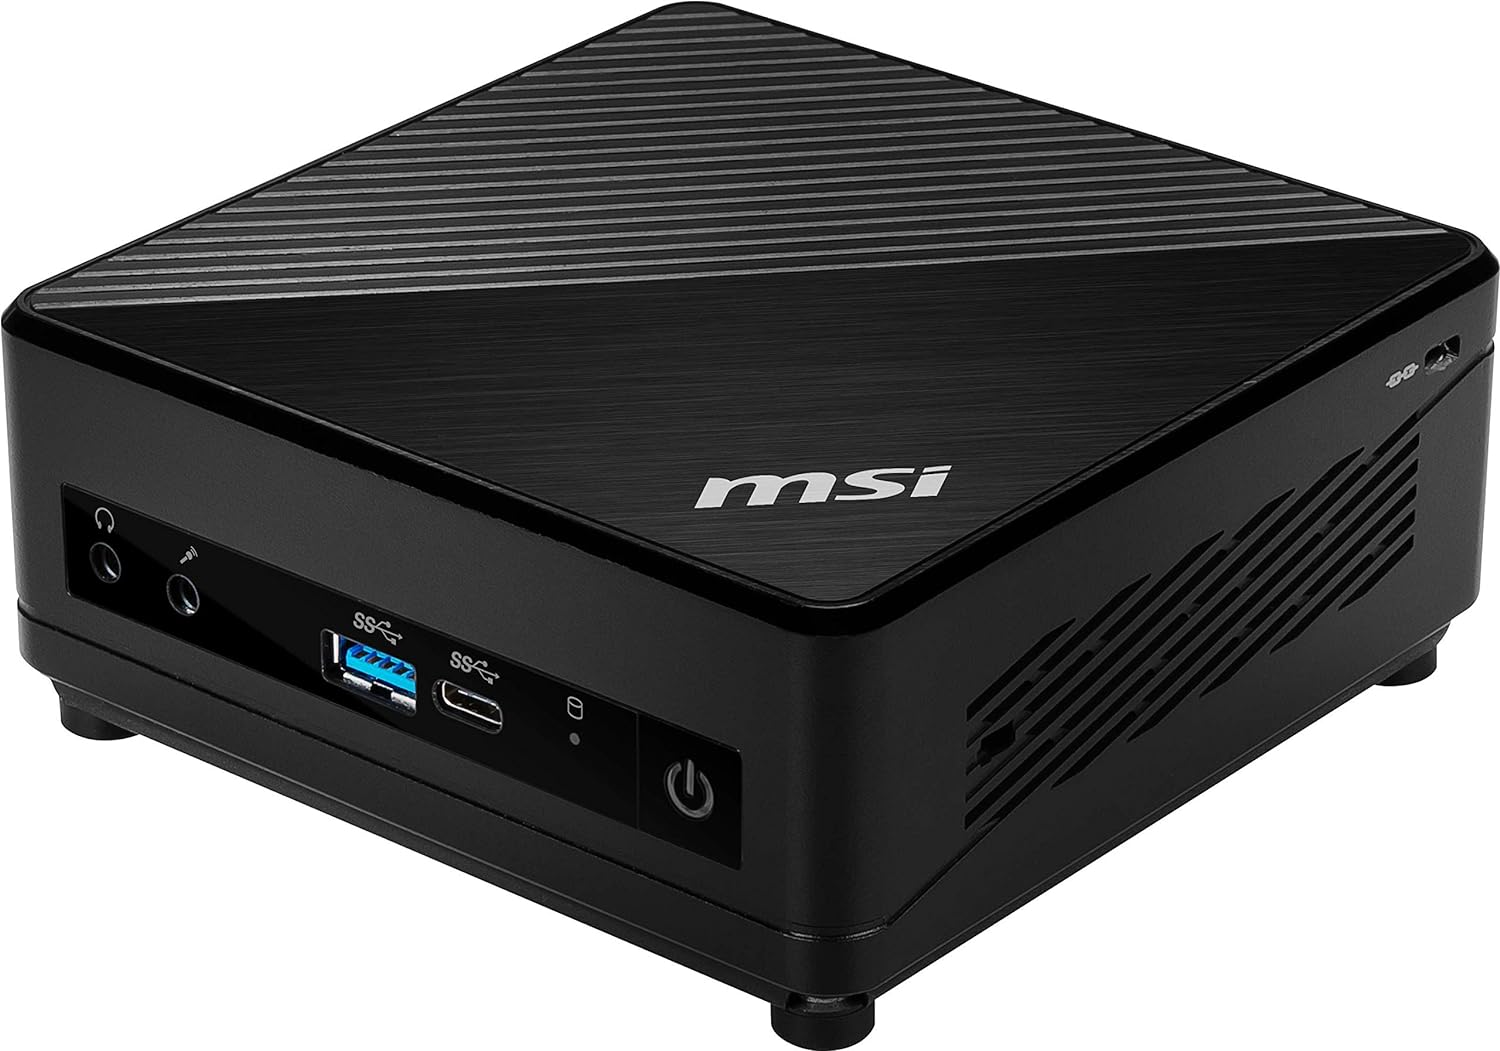 MSI Cubi 5 Mini PC: Intel Core i3-10110U, 8GB DDR4 (1x8GB) 2666MHz, 256GB SSD, WiFi 6, Bluetooth 5.1, USB Type-C, Dual Display, Energy Efficient, Black, Windows 11 Home: 10M-692US (Renewed)